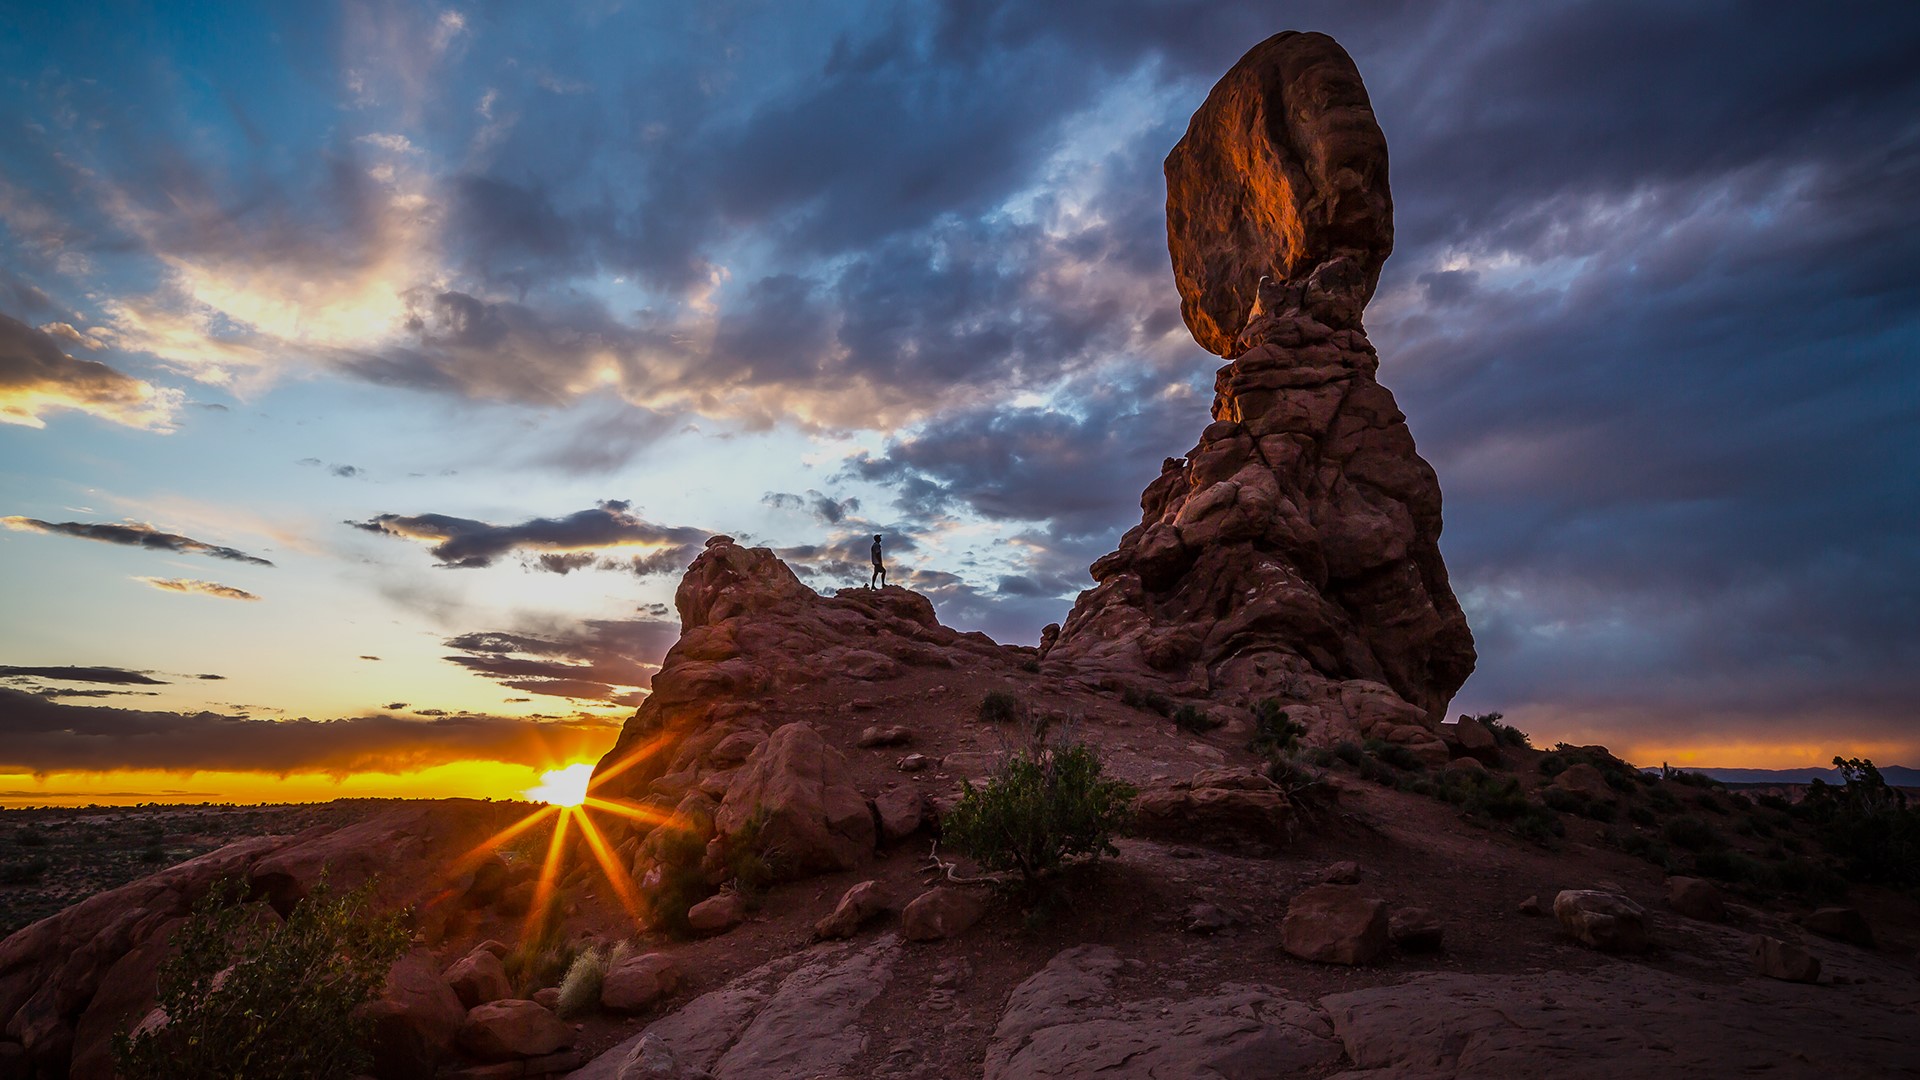 Nature Landscape Clouds Rocks Plants Sky Mountains Sun Sunset Arches National Park Utah USA 1920x1080